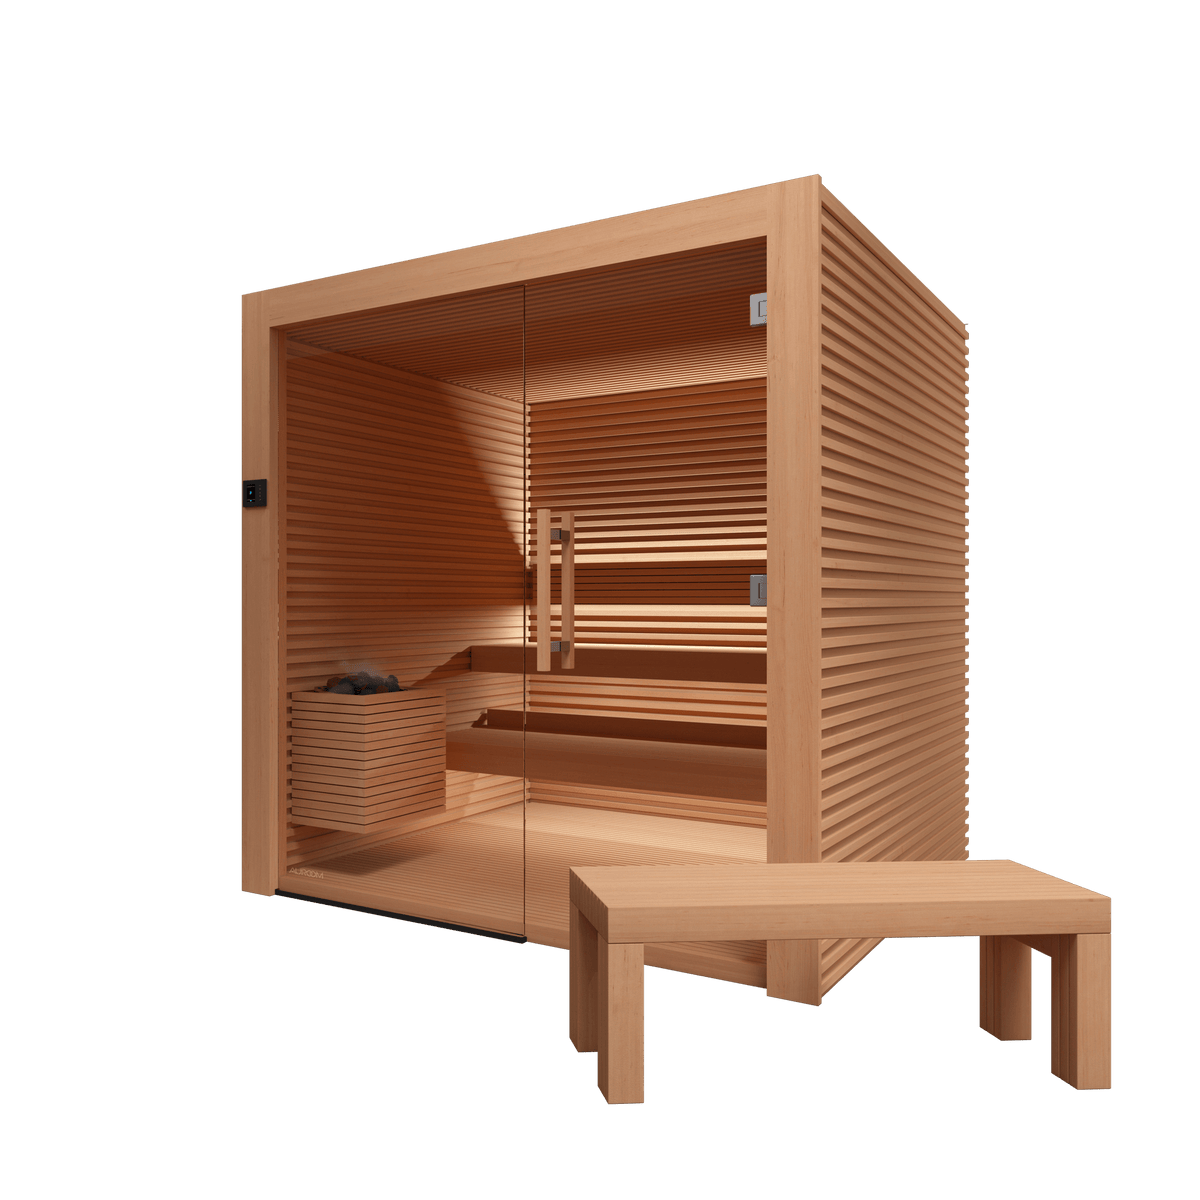 Auroom Nativa 5-Person Cabin Sauna Kit